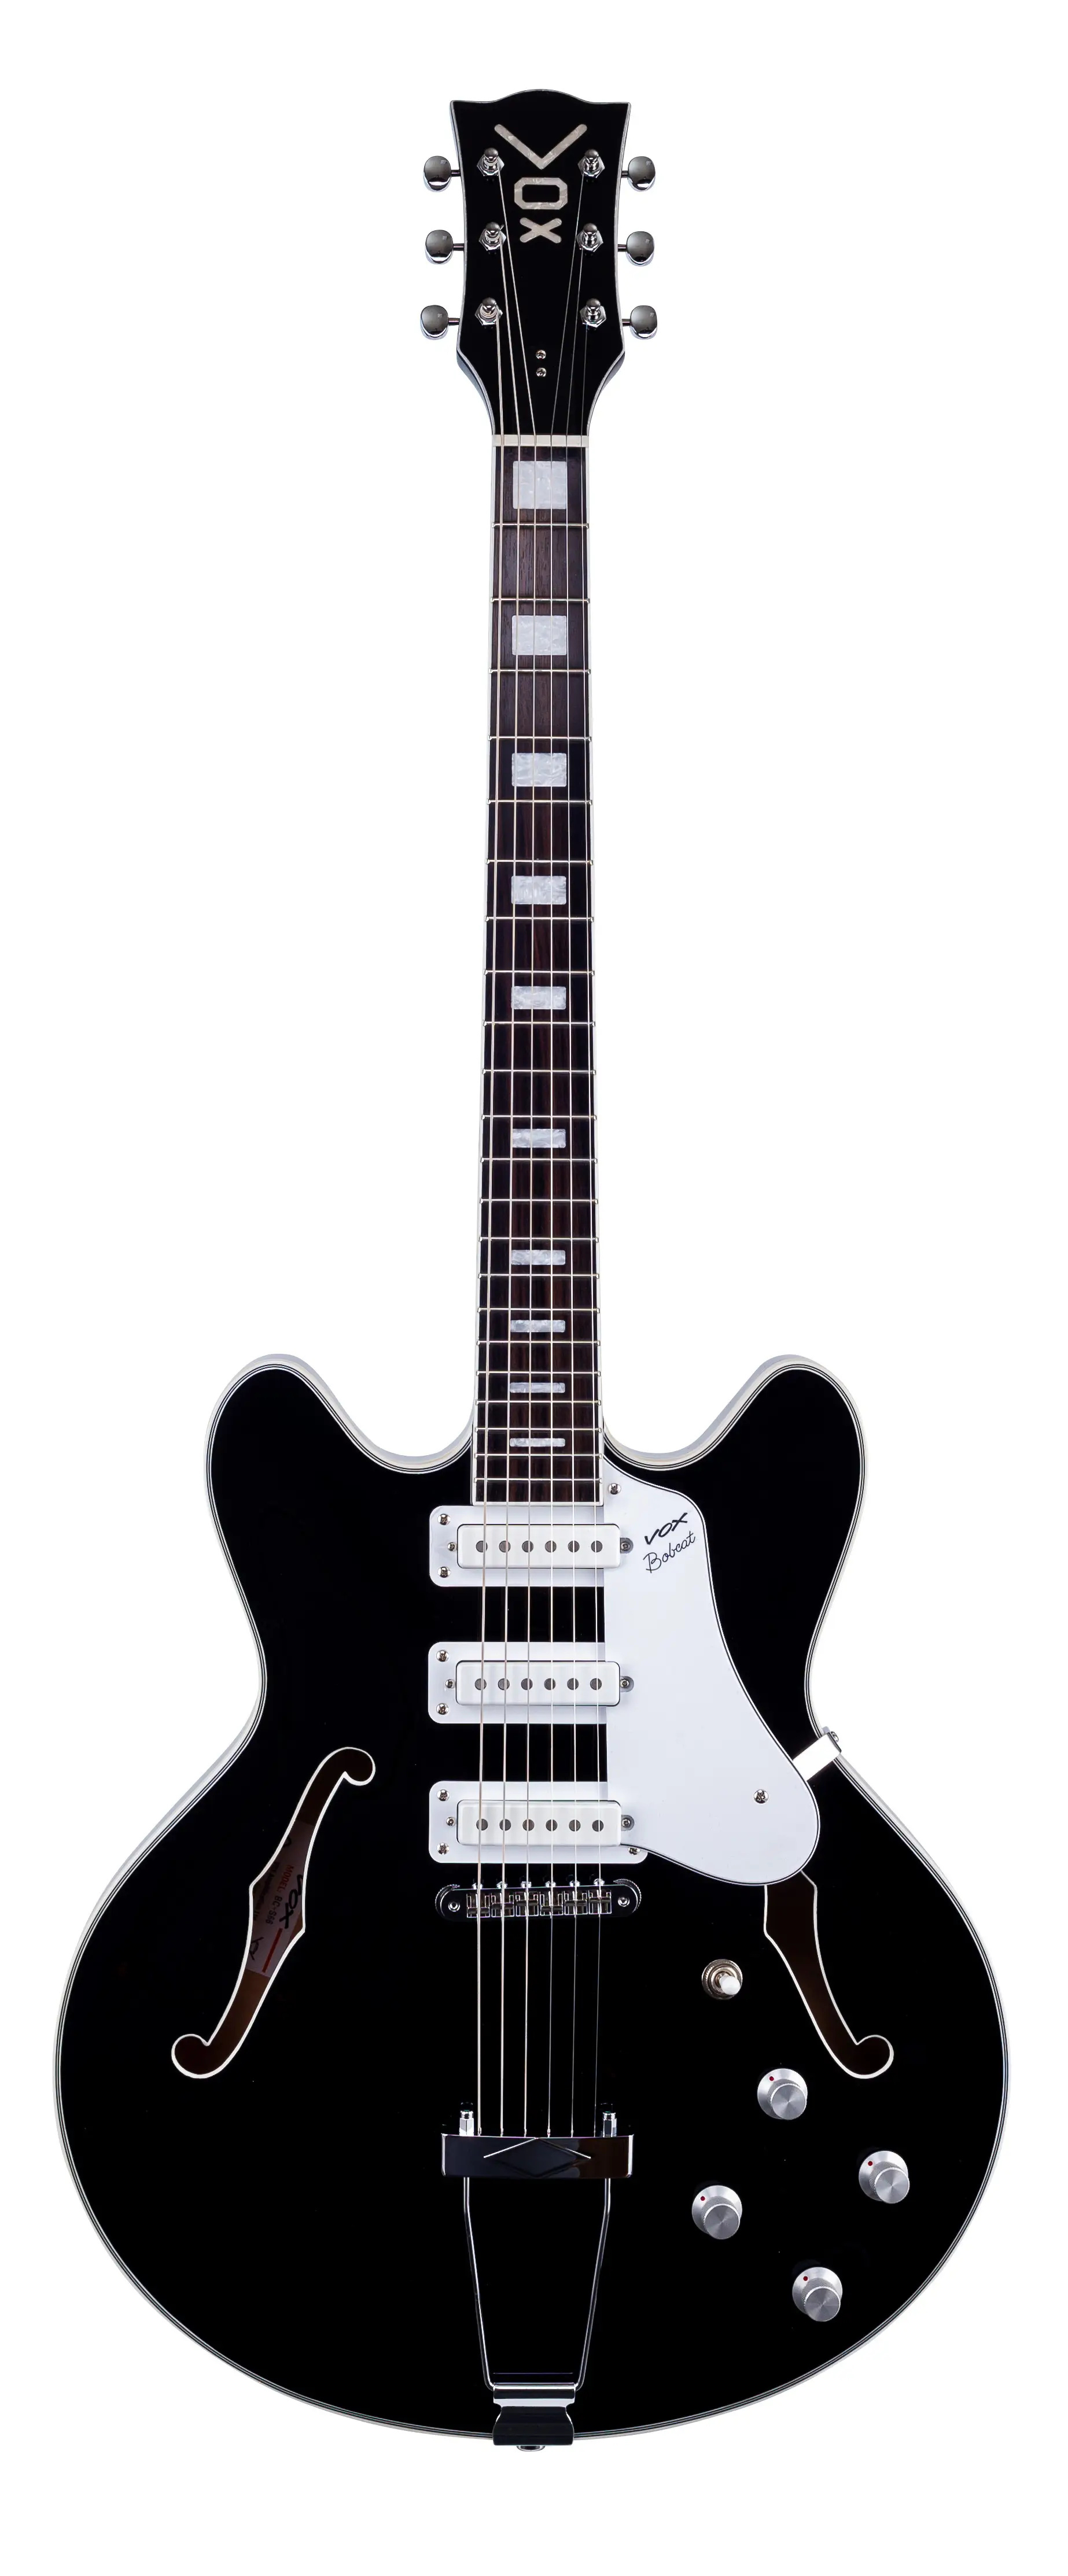 Vox Bobcat S66 Electric Guitar (Black)